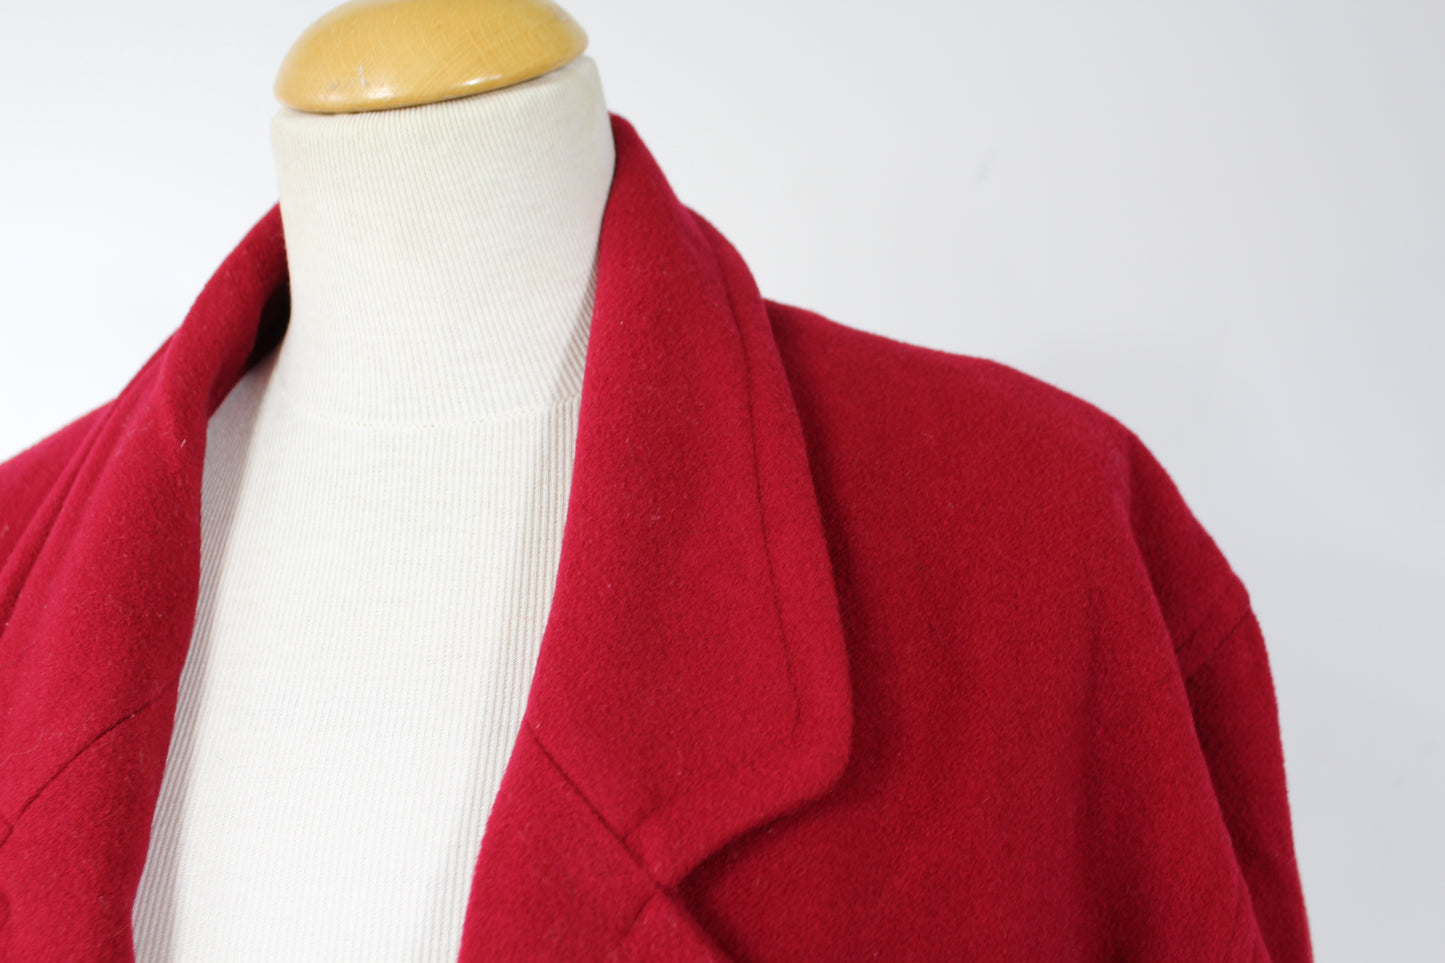 Manteau vintage rouge long laine Uzo France